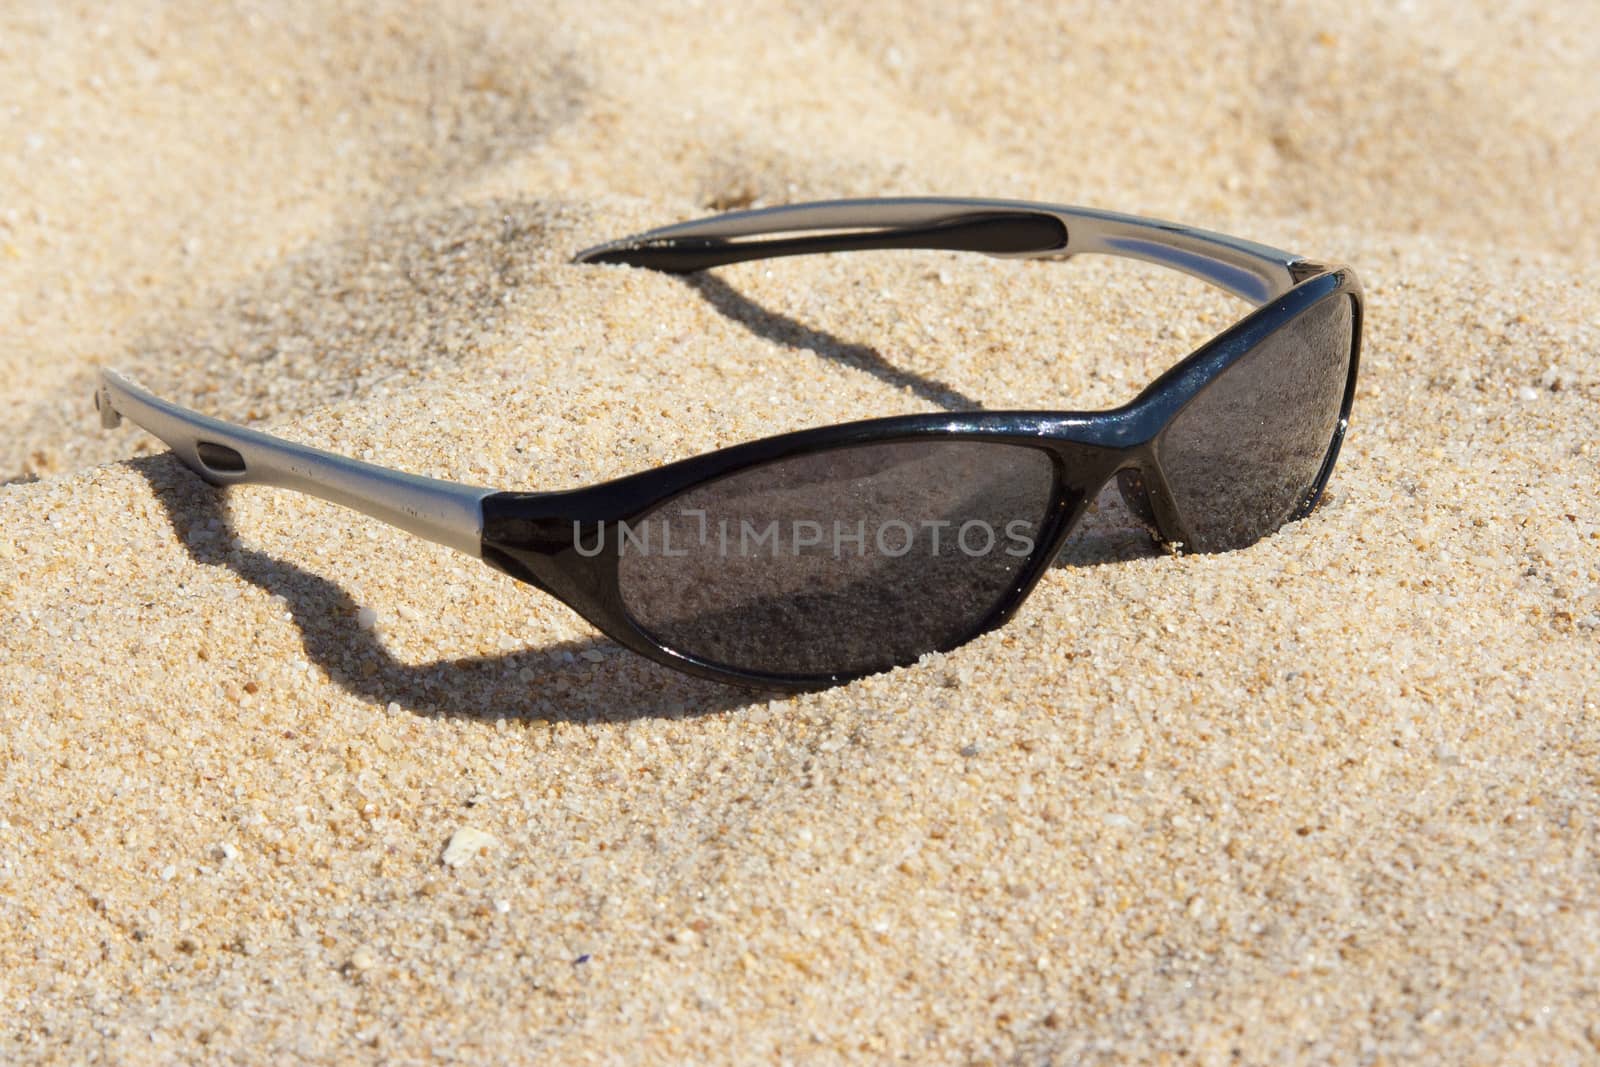 Sunglasses on a sandy beach in summer